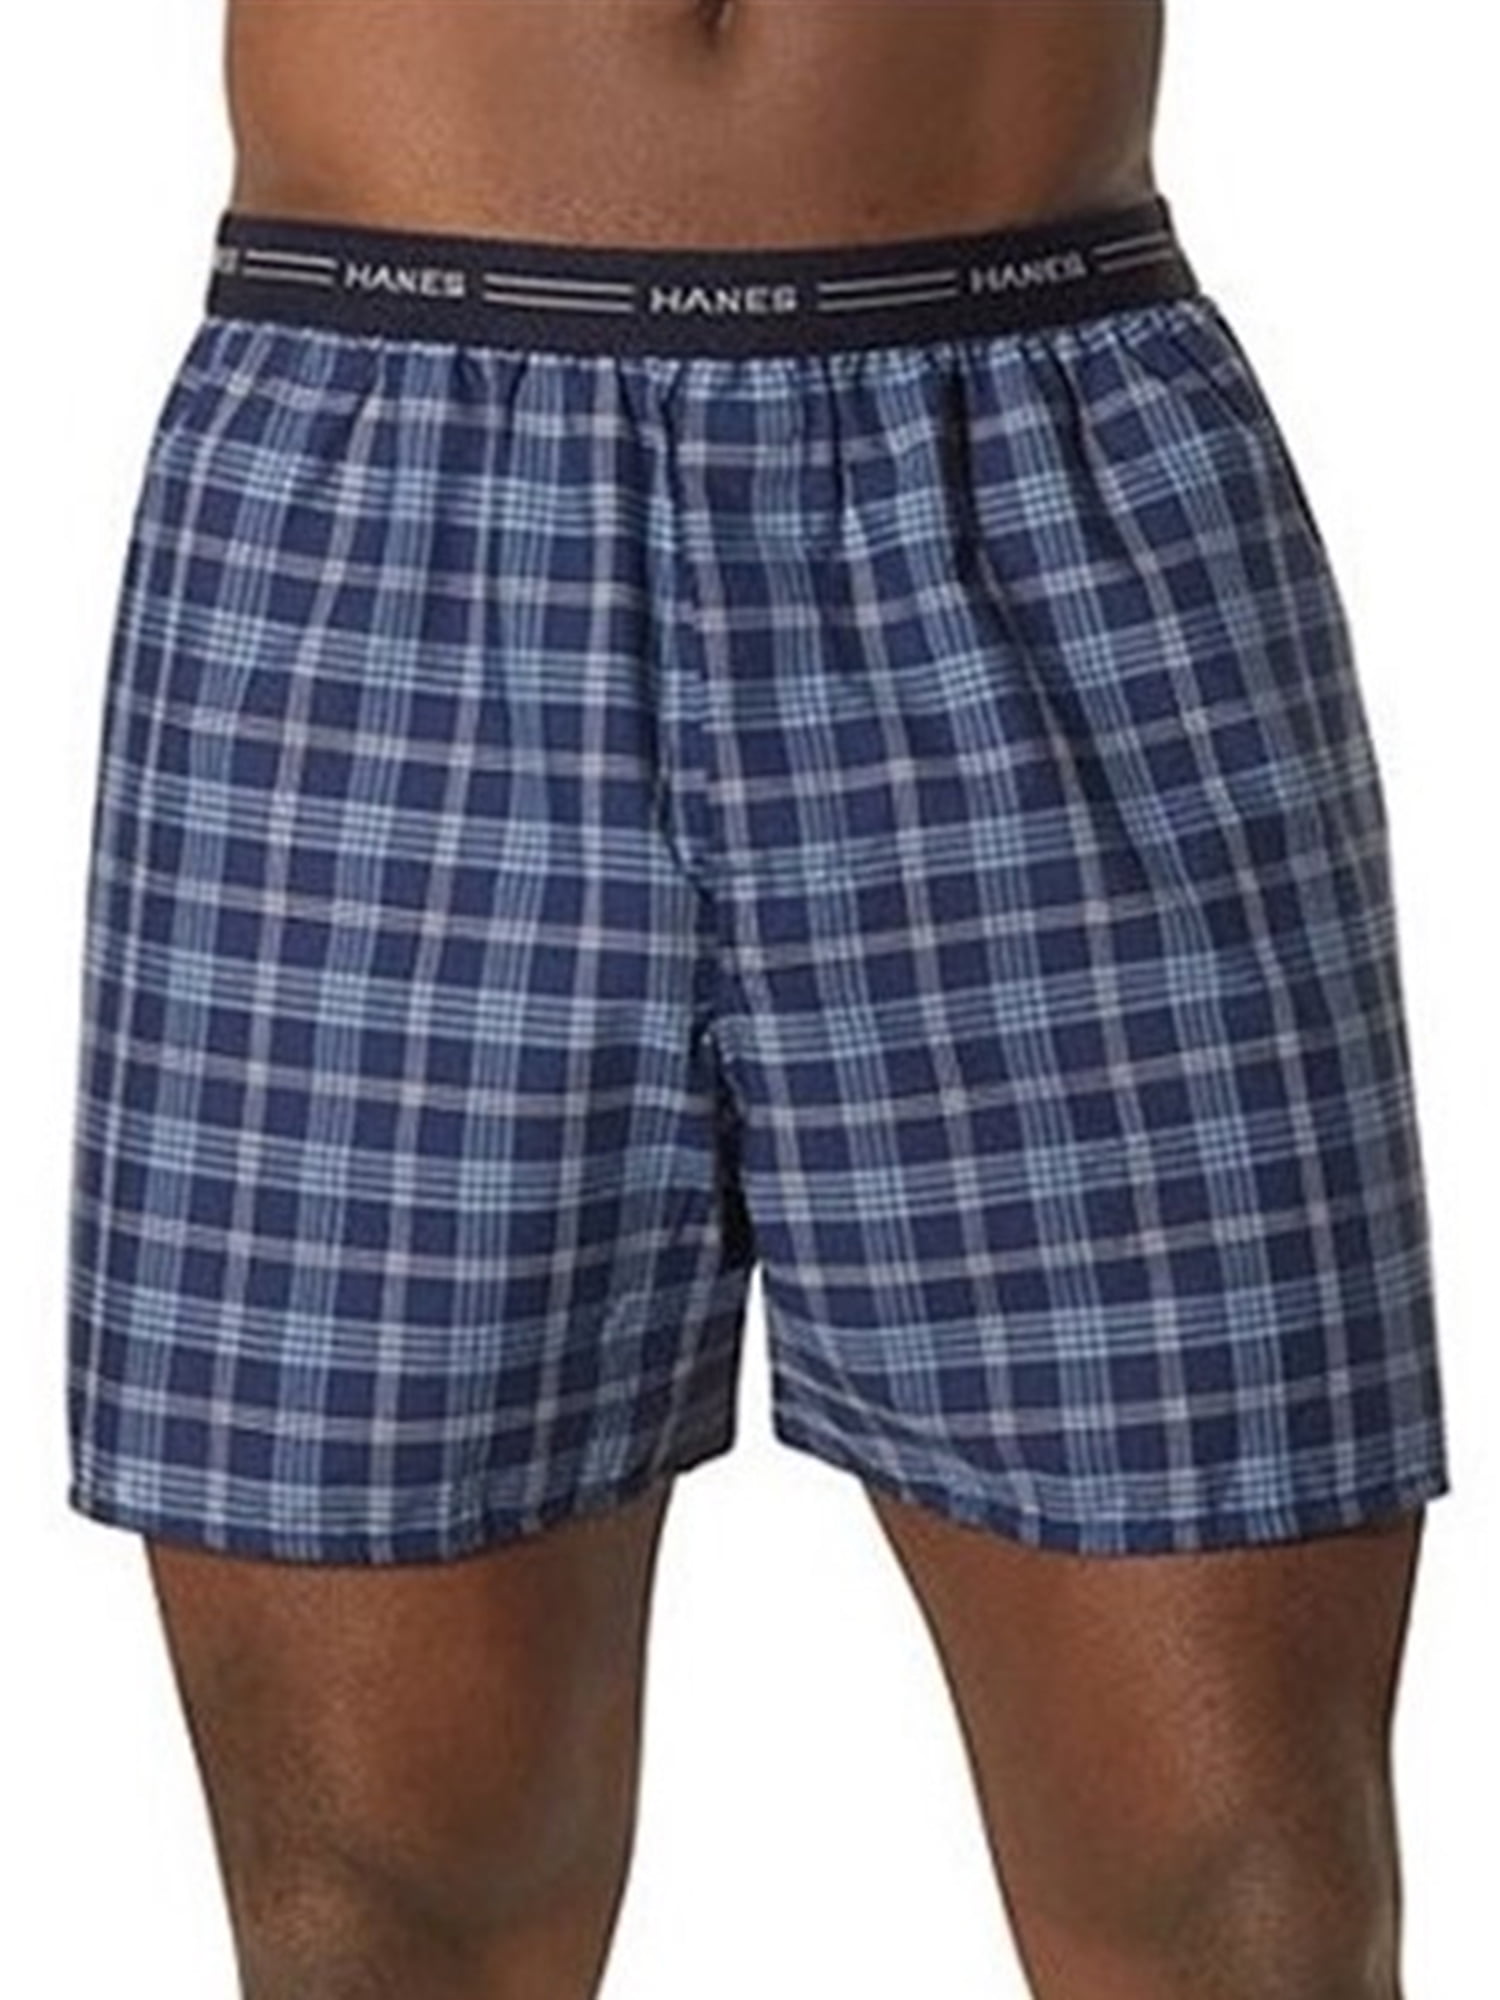 5Mayi Men/'s 100/% Cotton Woven Boxer Shorts Colorful Mens Tartan Plaid Boxers Underwear for Men Pack